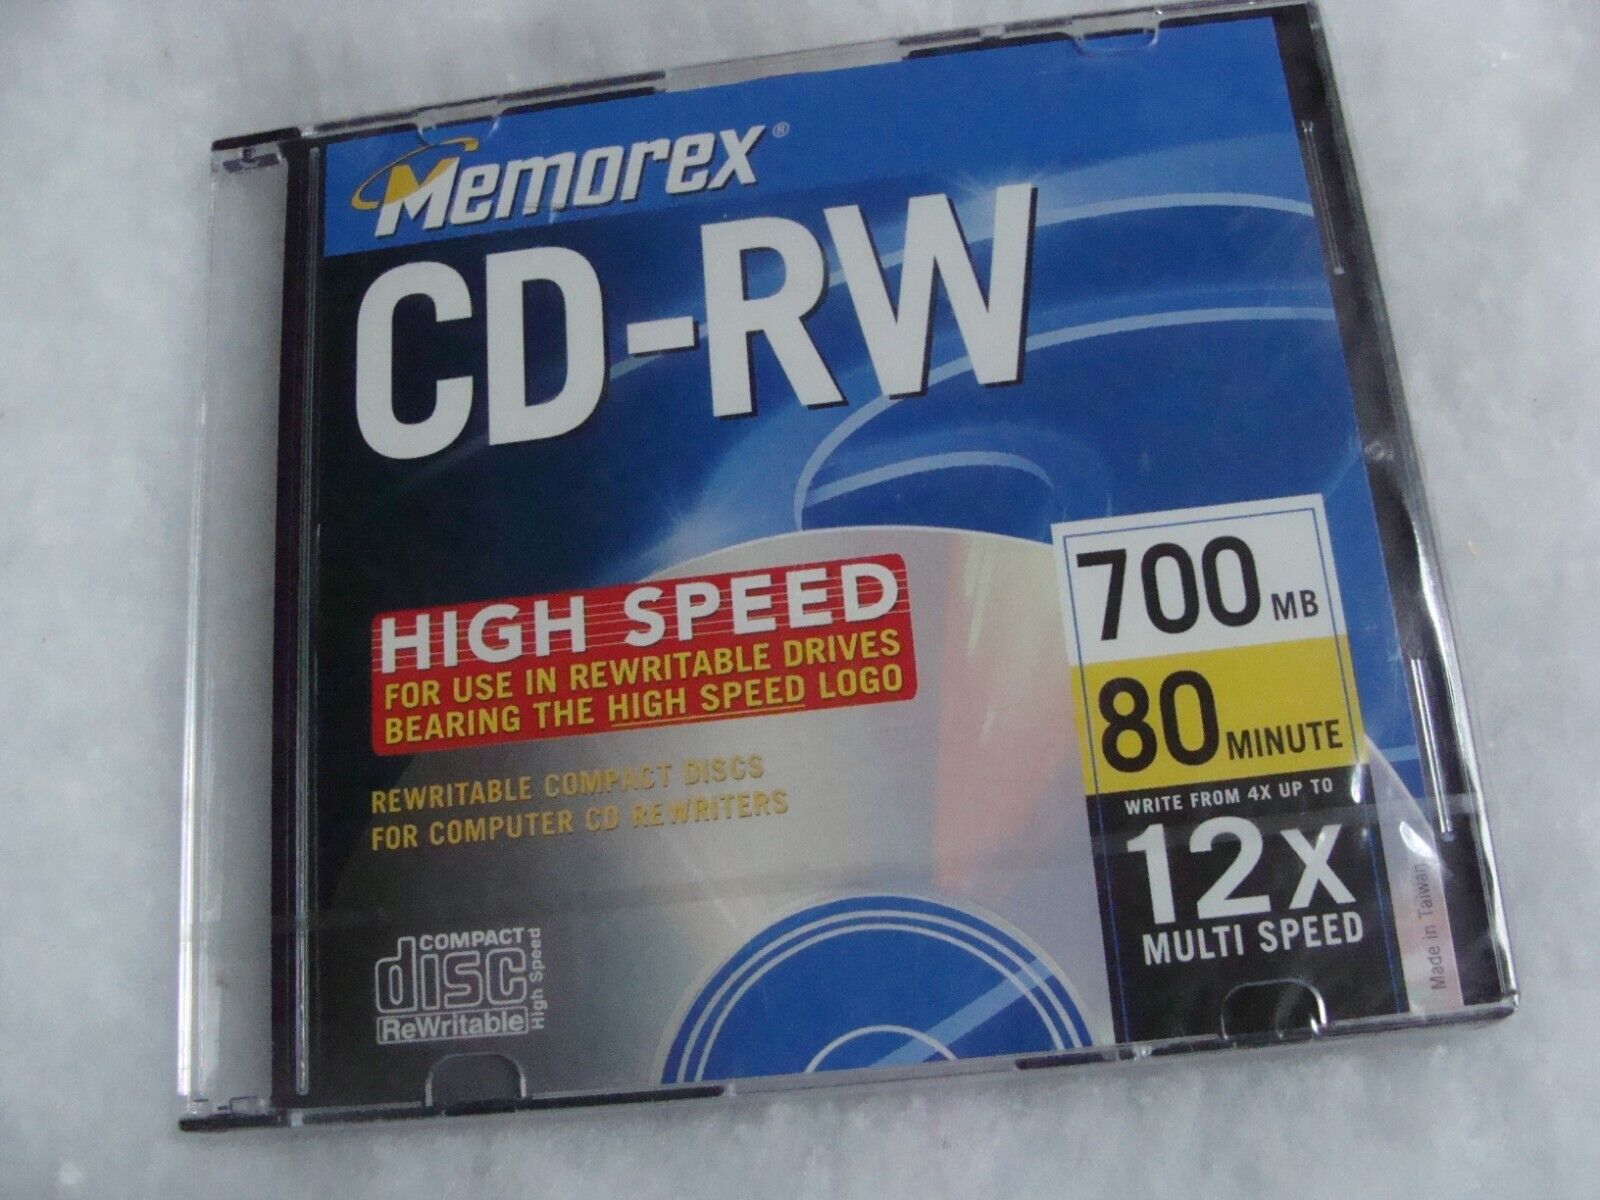 NEW SEALED Memorex High Speed CD-RW Rewritable 700MB 80min